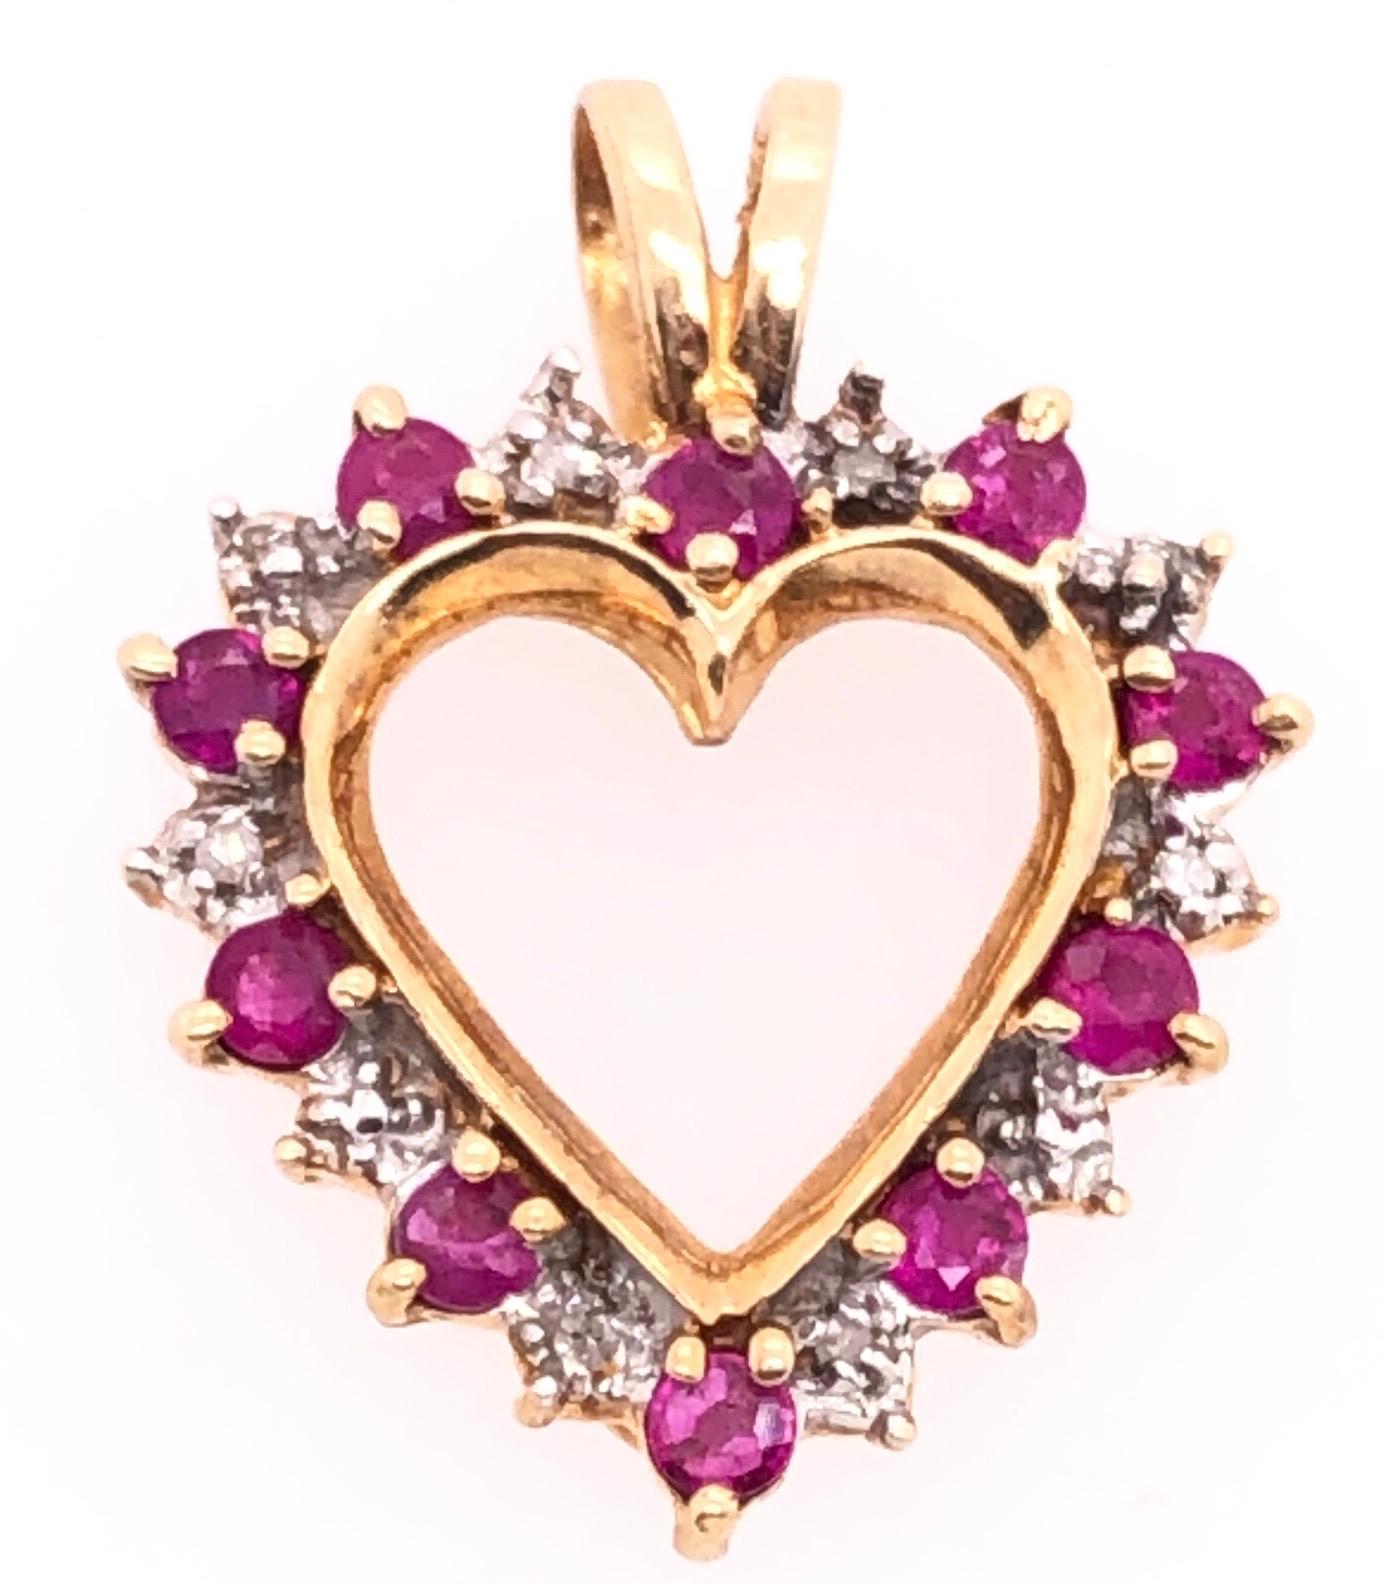 10 Karat Yellow Gold Heart Diamond and Amethyst Pendant For Sale 1